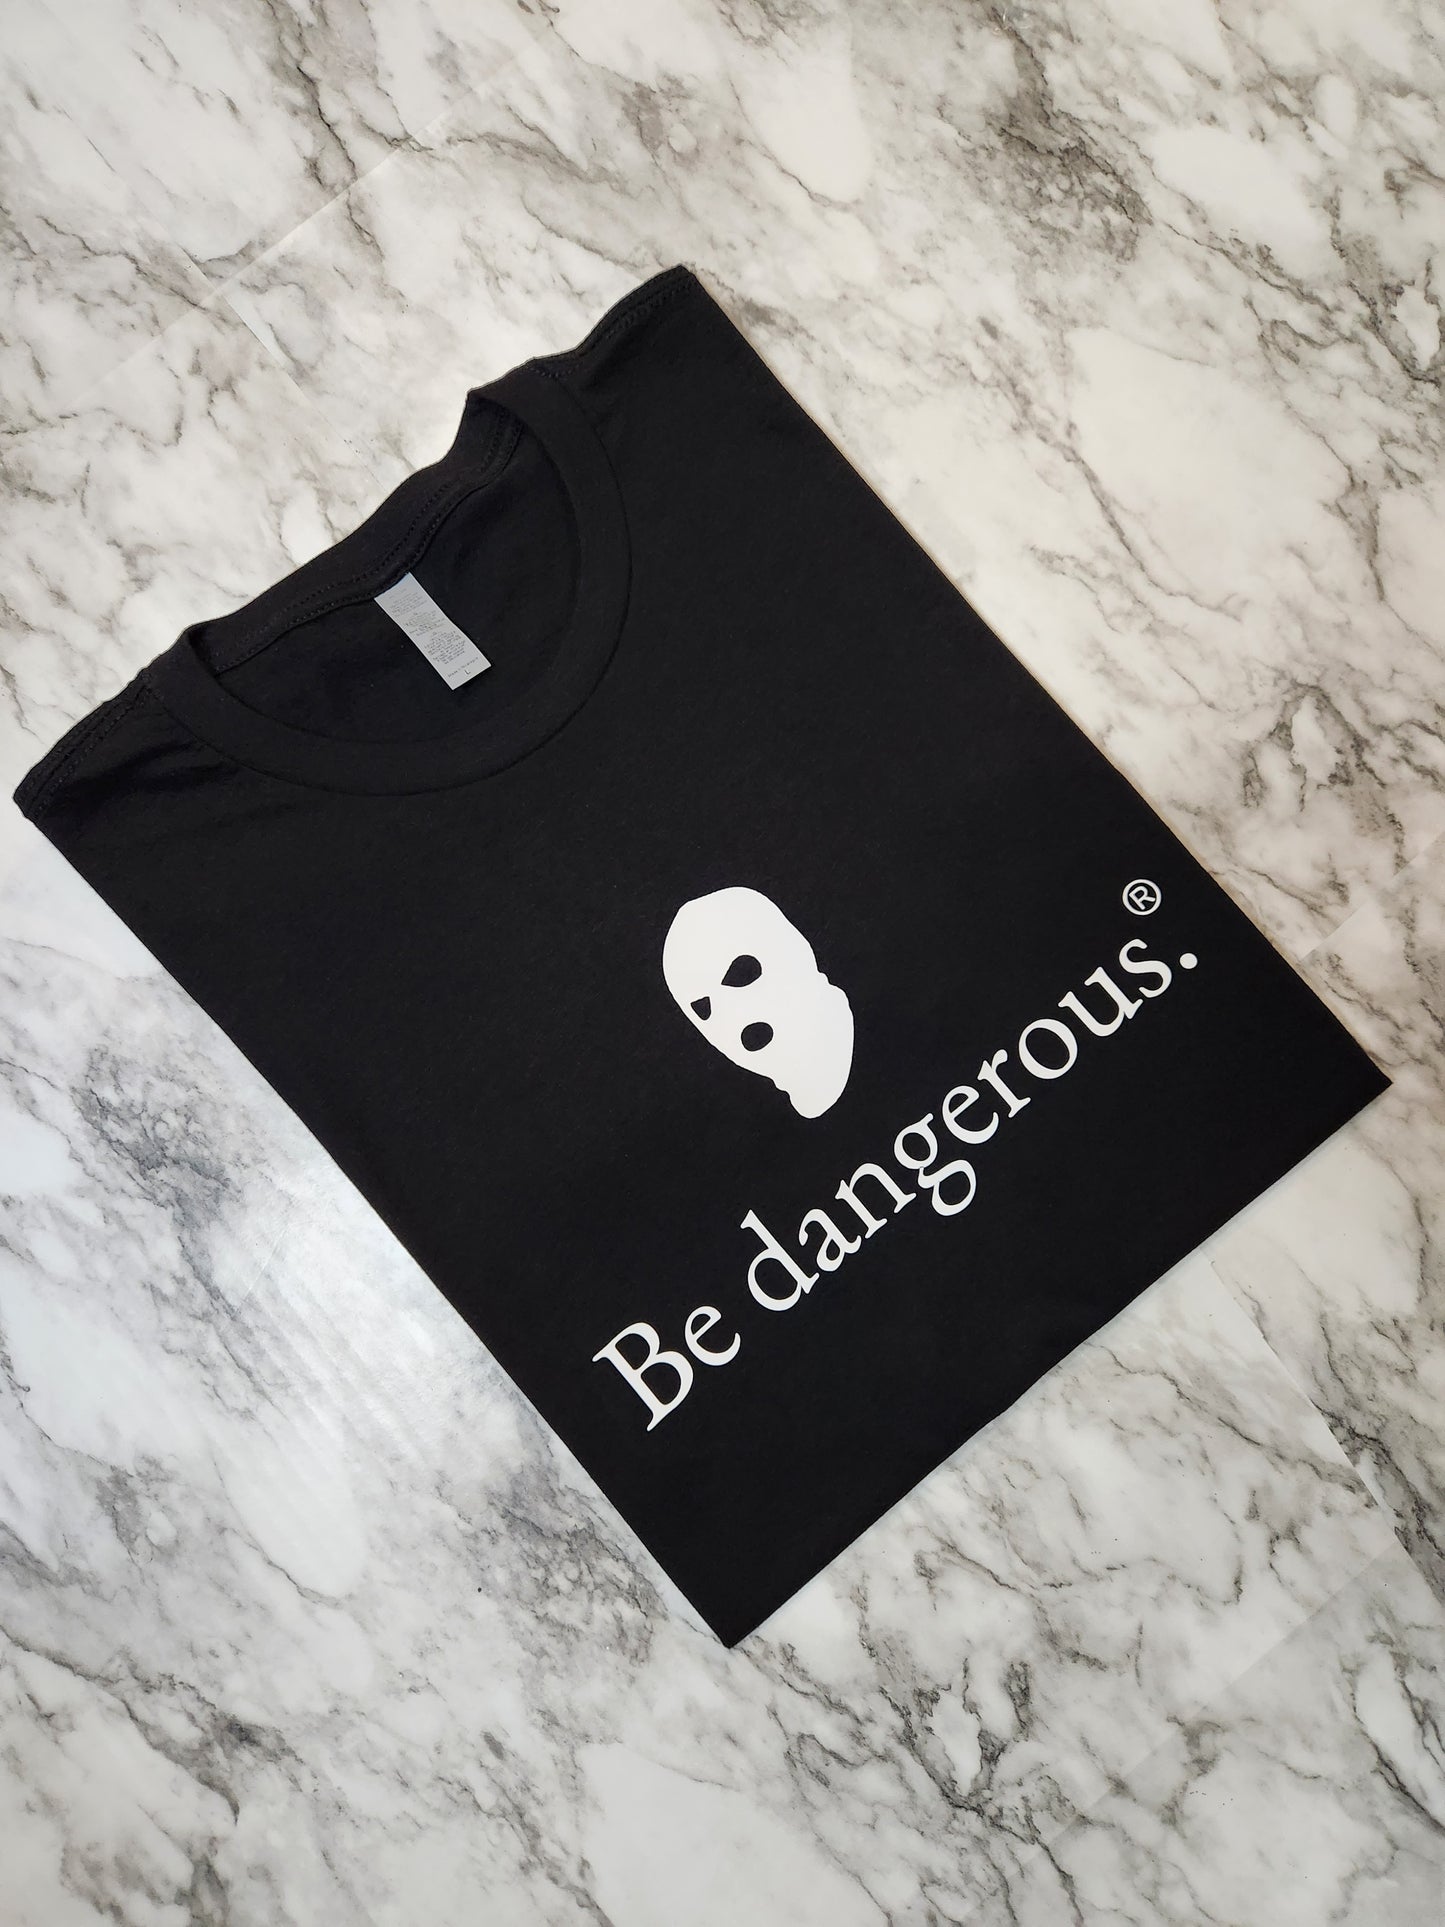 Be dangerous. T-Shirt - Centre Ave Clothing Co.